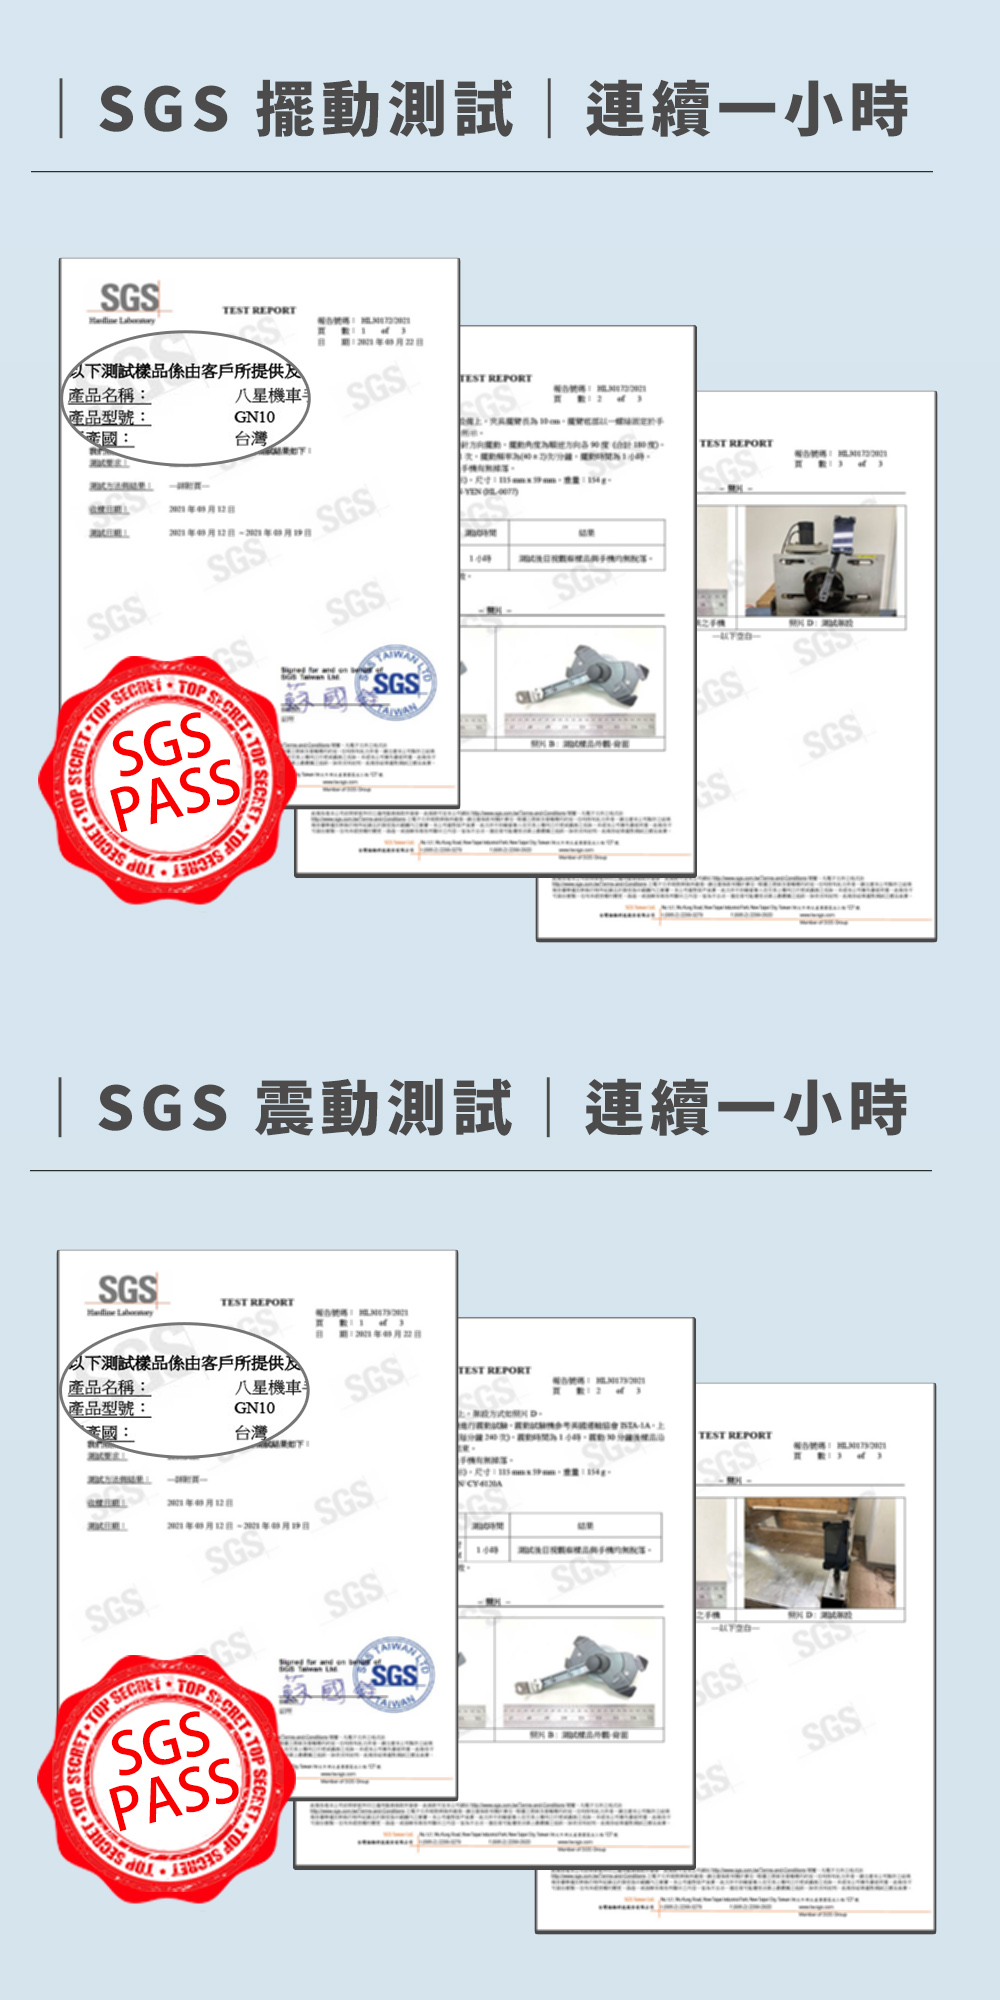 S 擺動測試連續一小時 REORT 測試樣品係由客戶所提供產品名稱產品型號八星機GN0SGS REPORT台灣SGSSGSGSSGSSGS  S        SGSTEST REPORT10時SGSSGS| SGS 震動測試|連續一小時SGSTEST REPORT 測試樣品係由客戶所提供產品名稱:八星機車產品型號:GN10:台灣SGS月9月12 9月1日SGSGS P  TOP SGSPASSP  TOSGSSGSSGSSGSTEST REPORTTEST REPORTSGSGS: SGSSGS